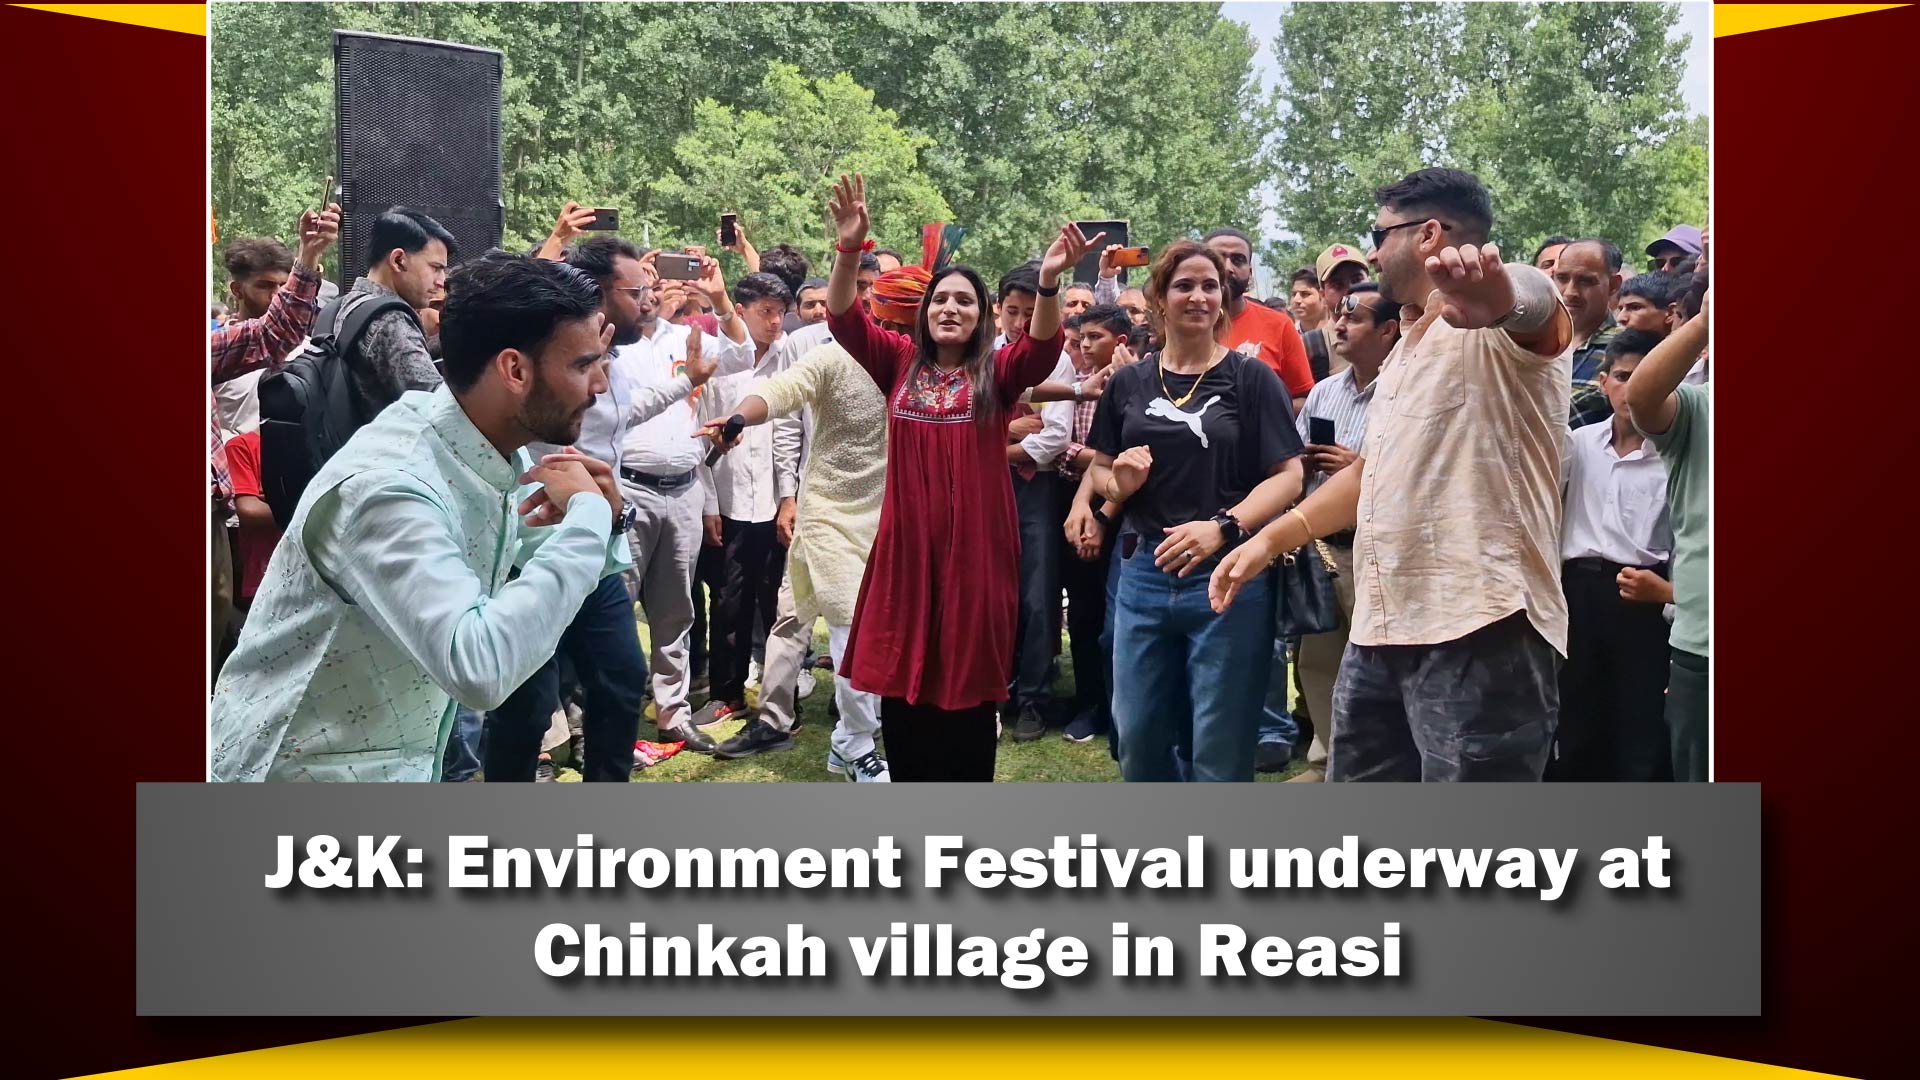 J&K: Environment Festival underway at Chinkah village in Reasi